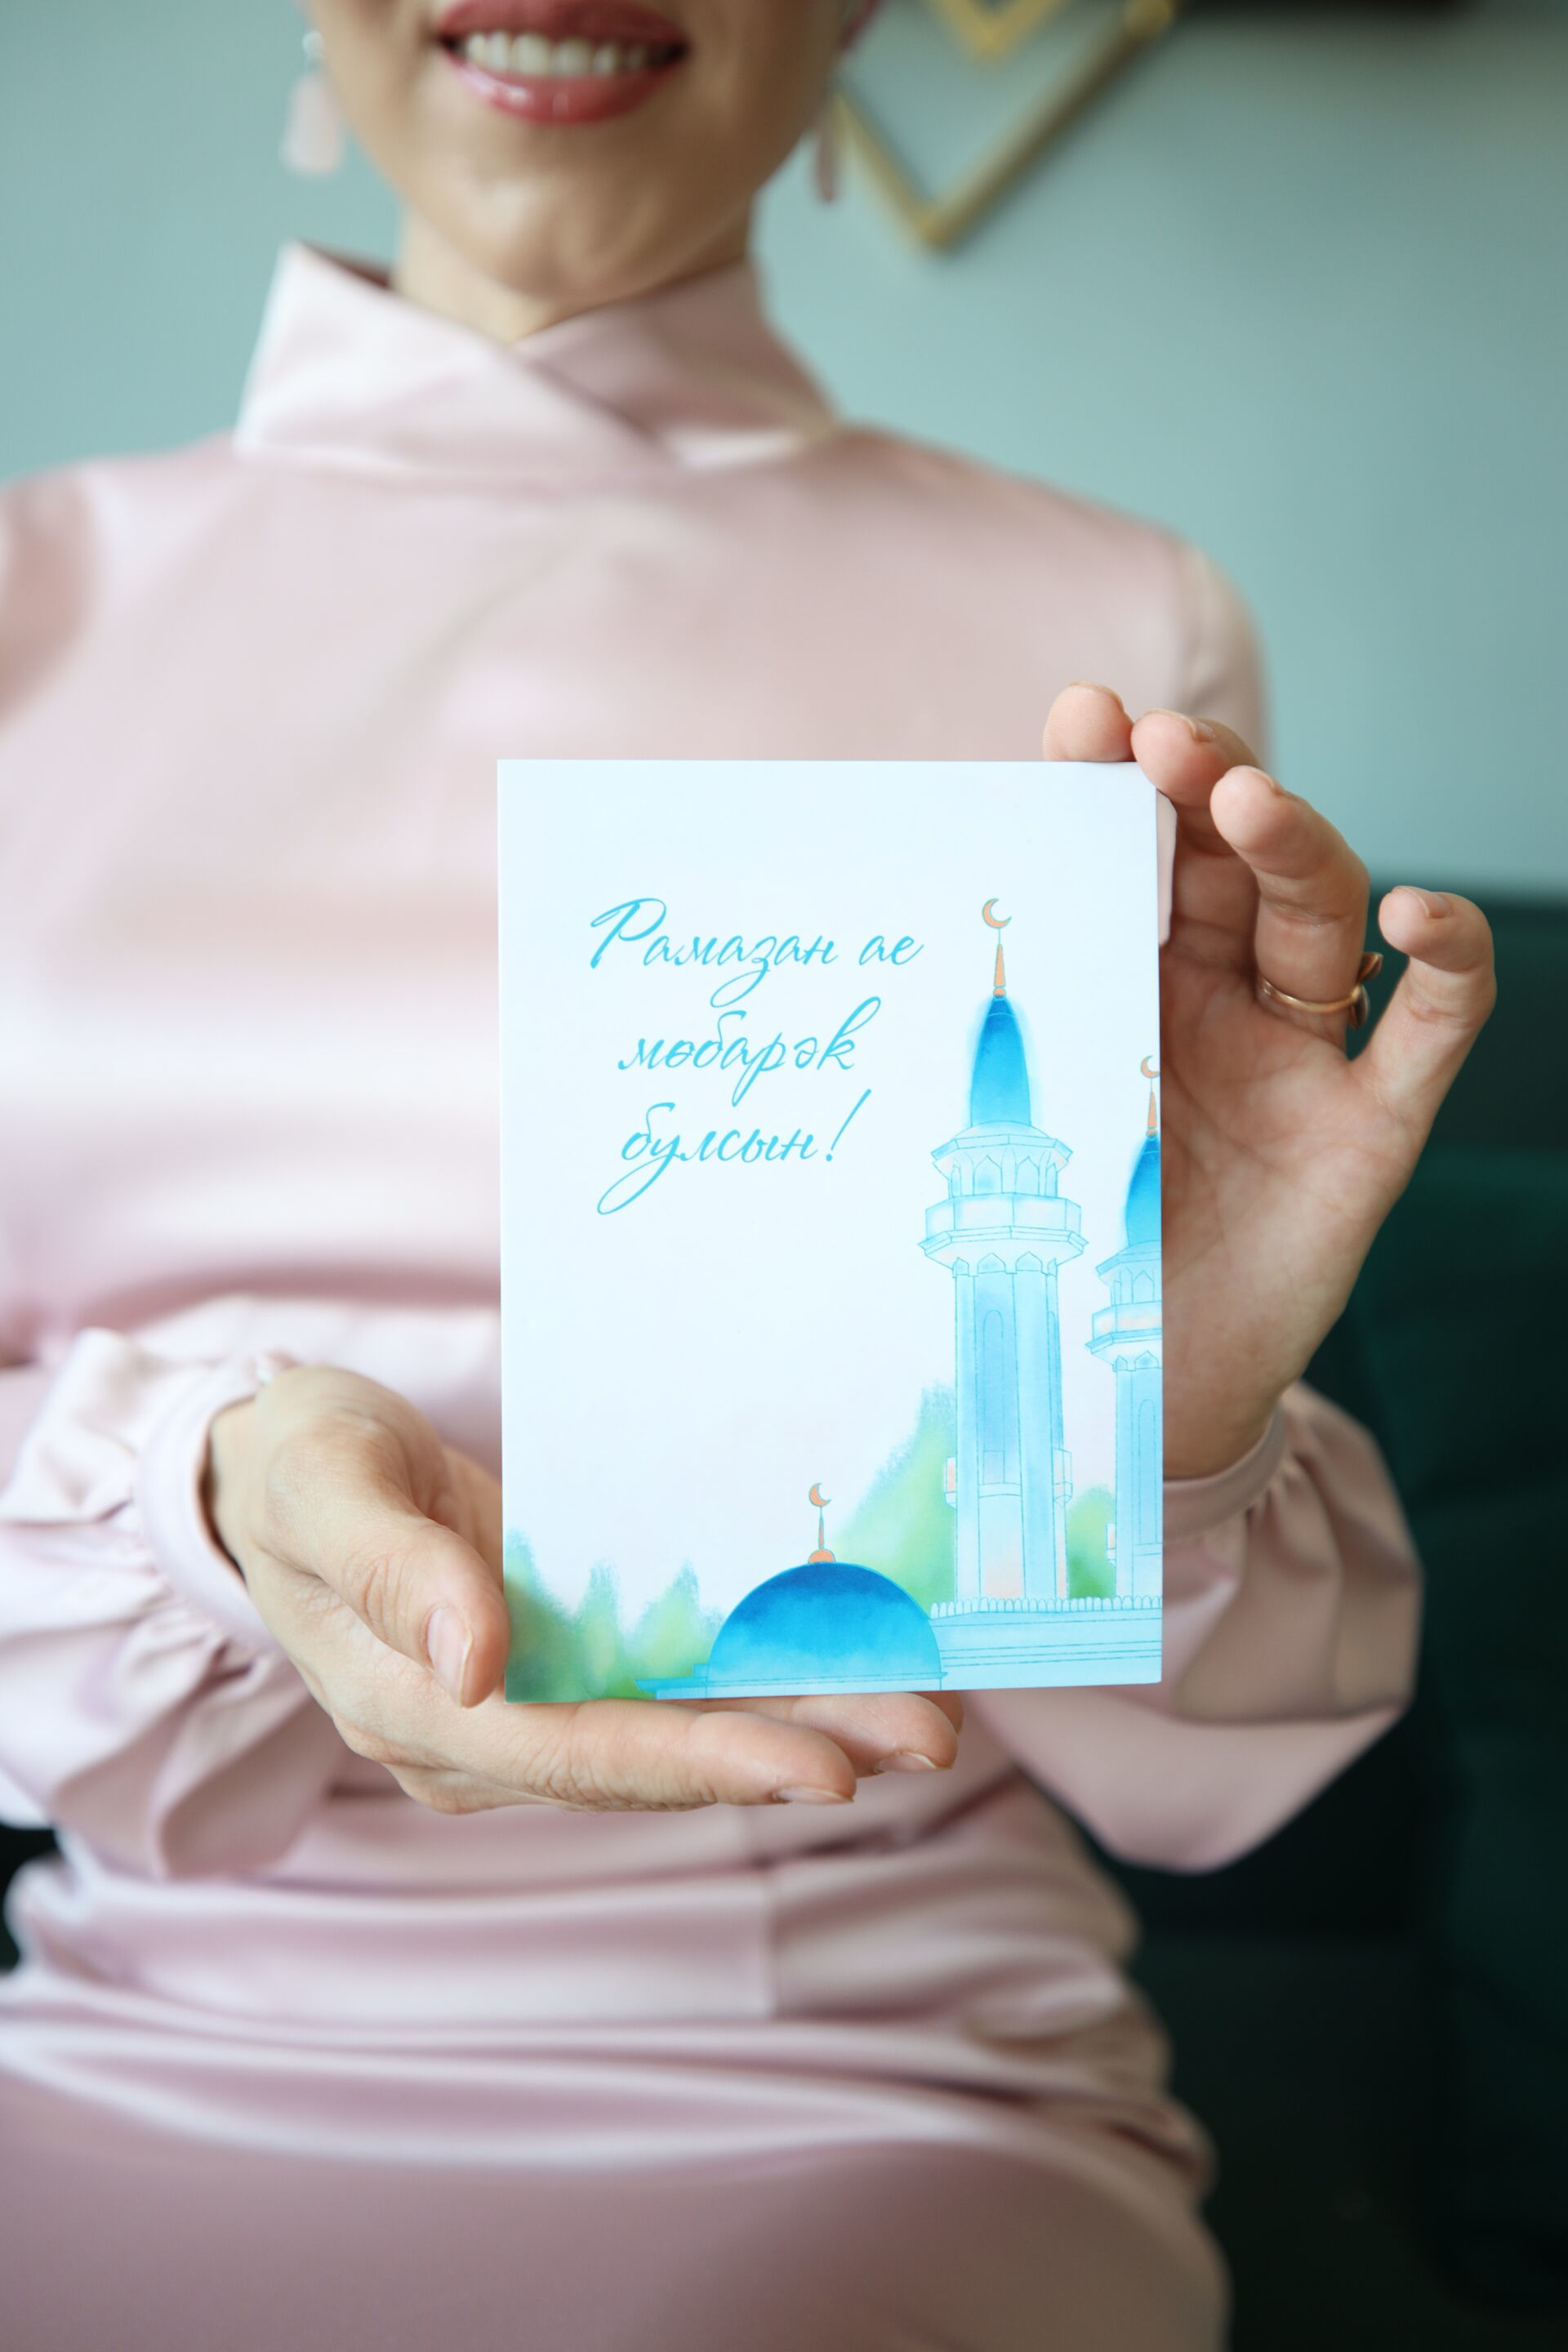 «Хатлар йорты» Рамазан аена мөселман открыткаларының беренче сериясен чыгарды